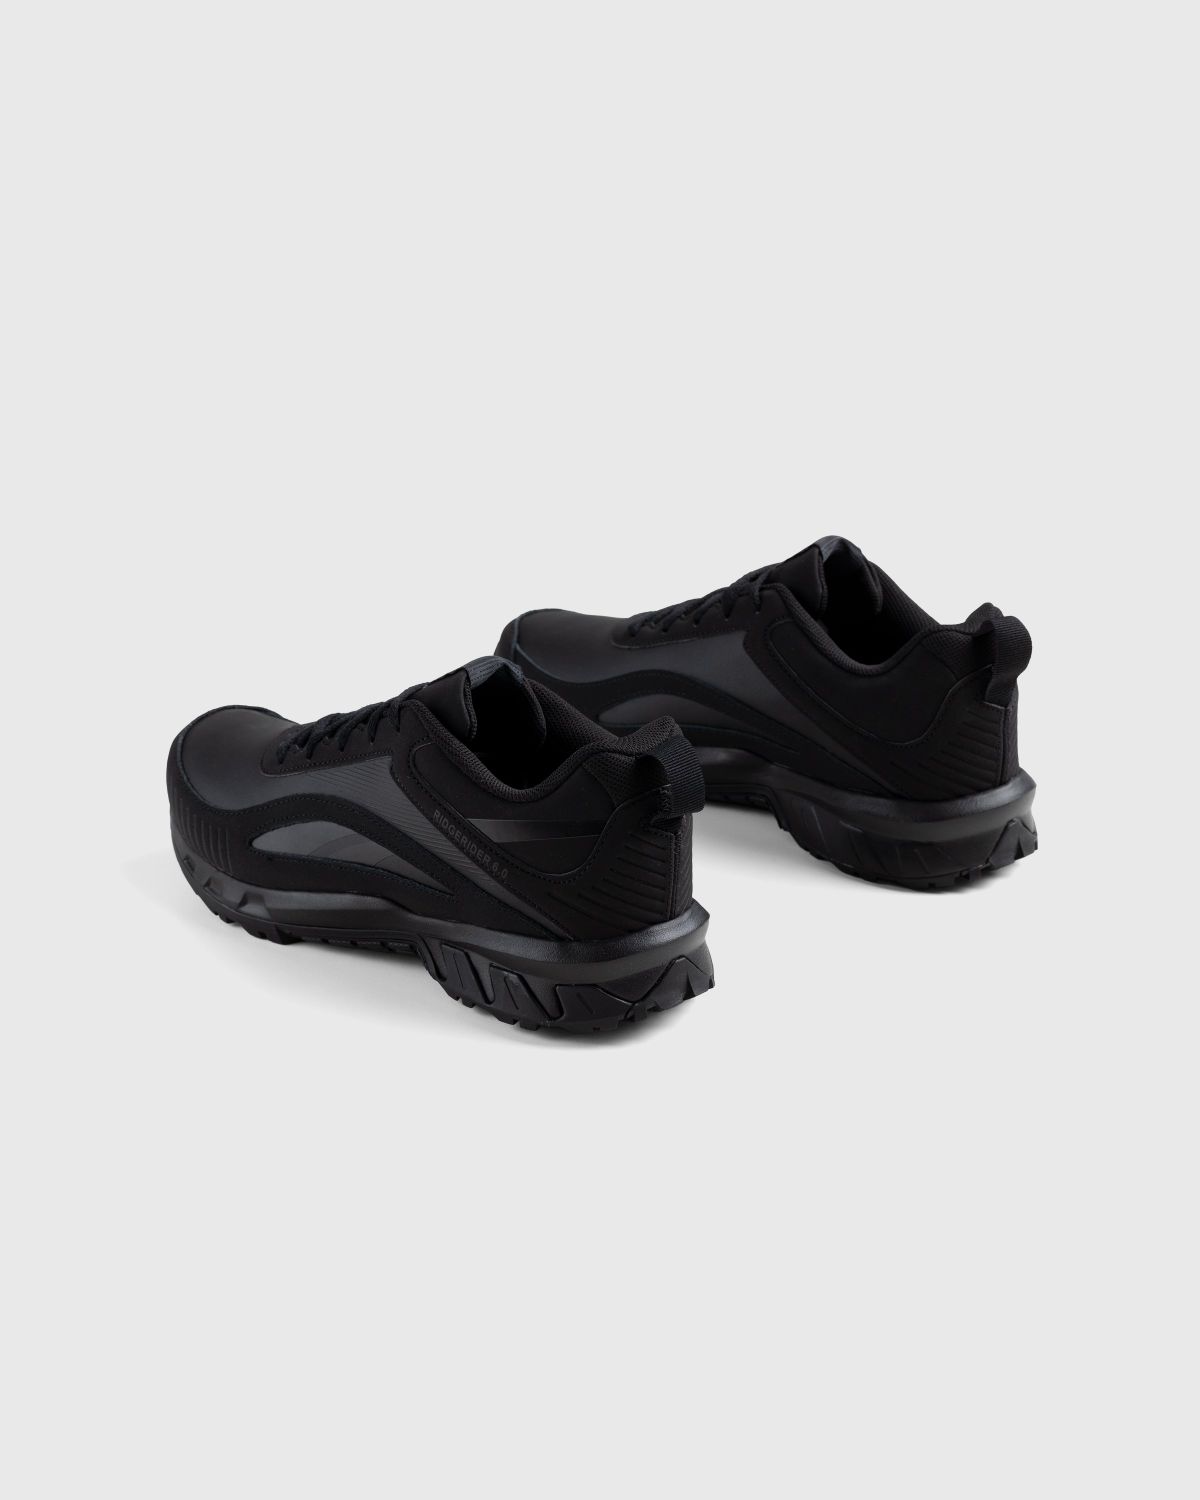 Reebok – Ridgerider 6.0 Leather Black - Sneakers - Black - Image 5